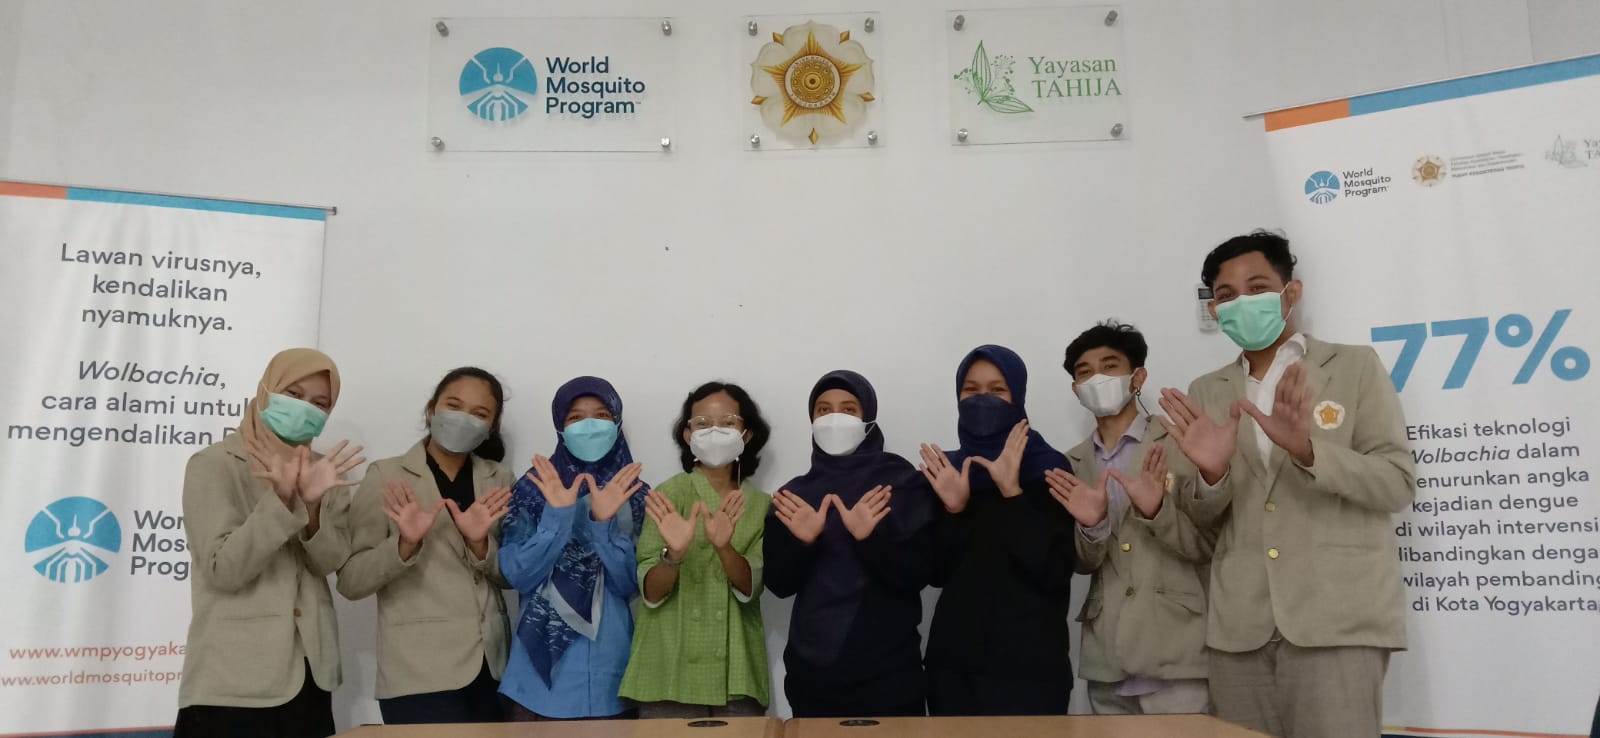 Kunjungan Virtual di The World Mosquito Program Indonesia